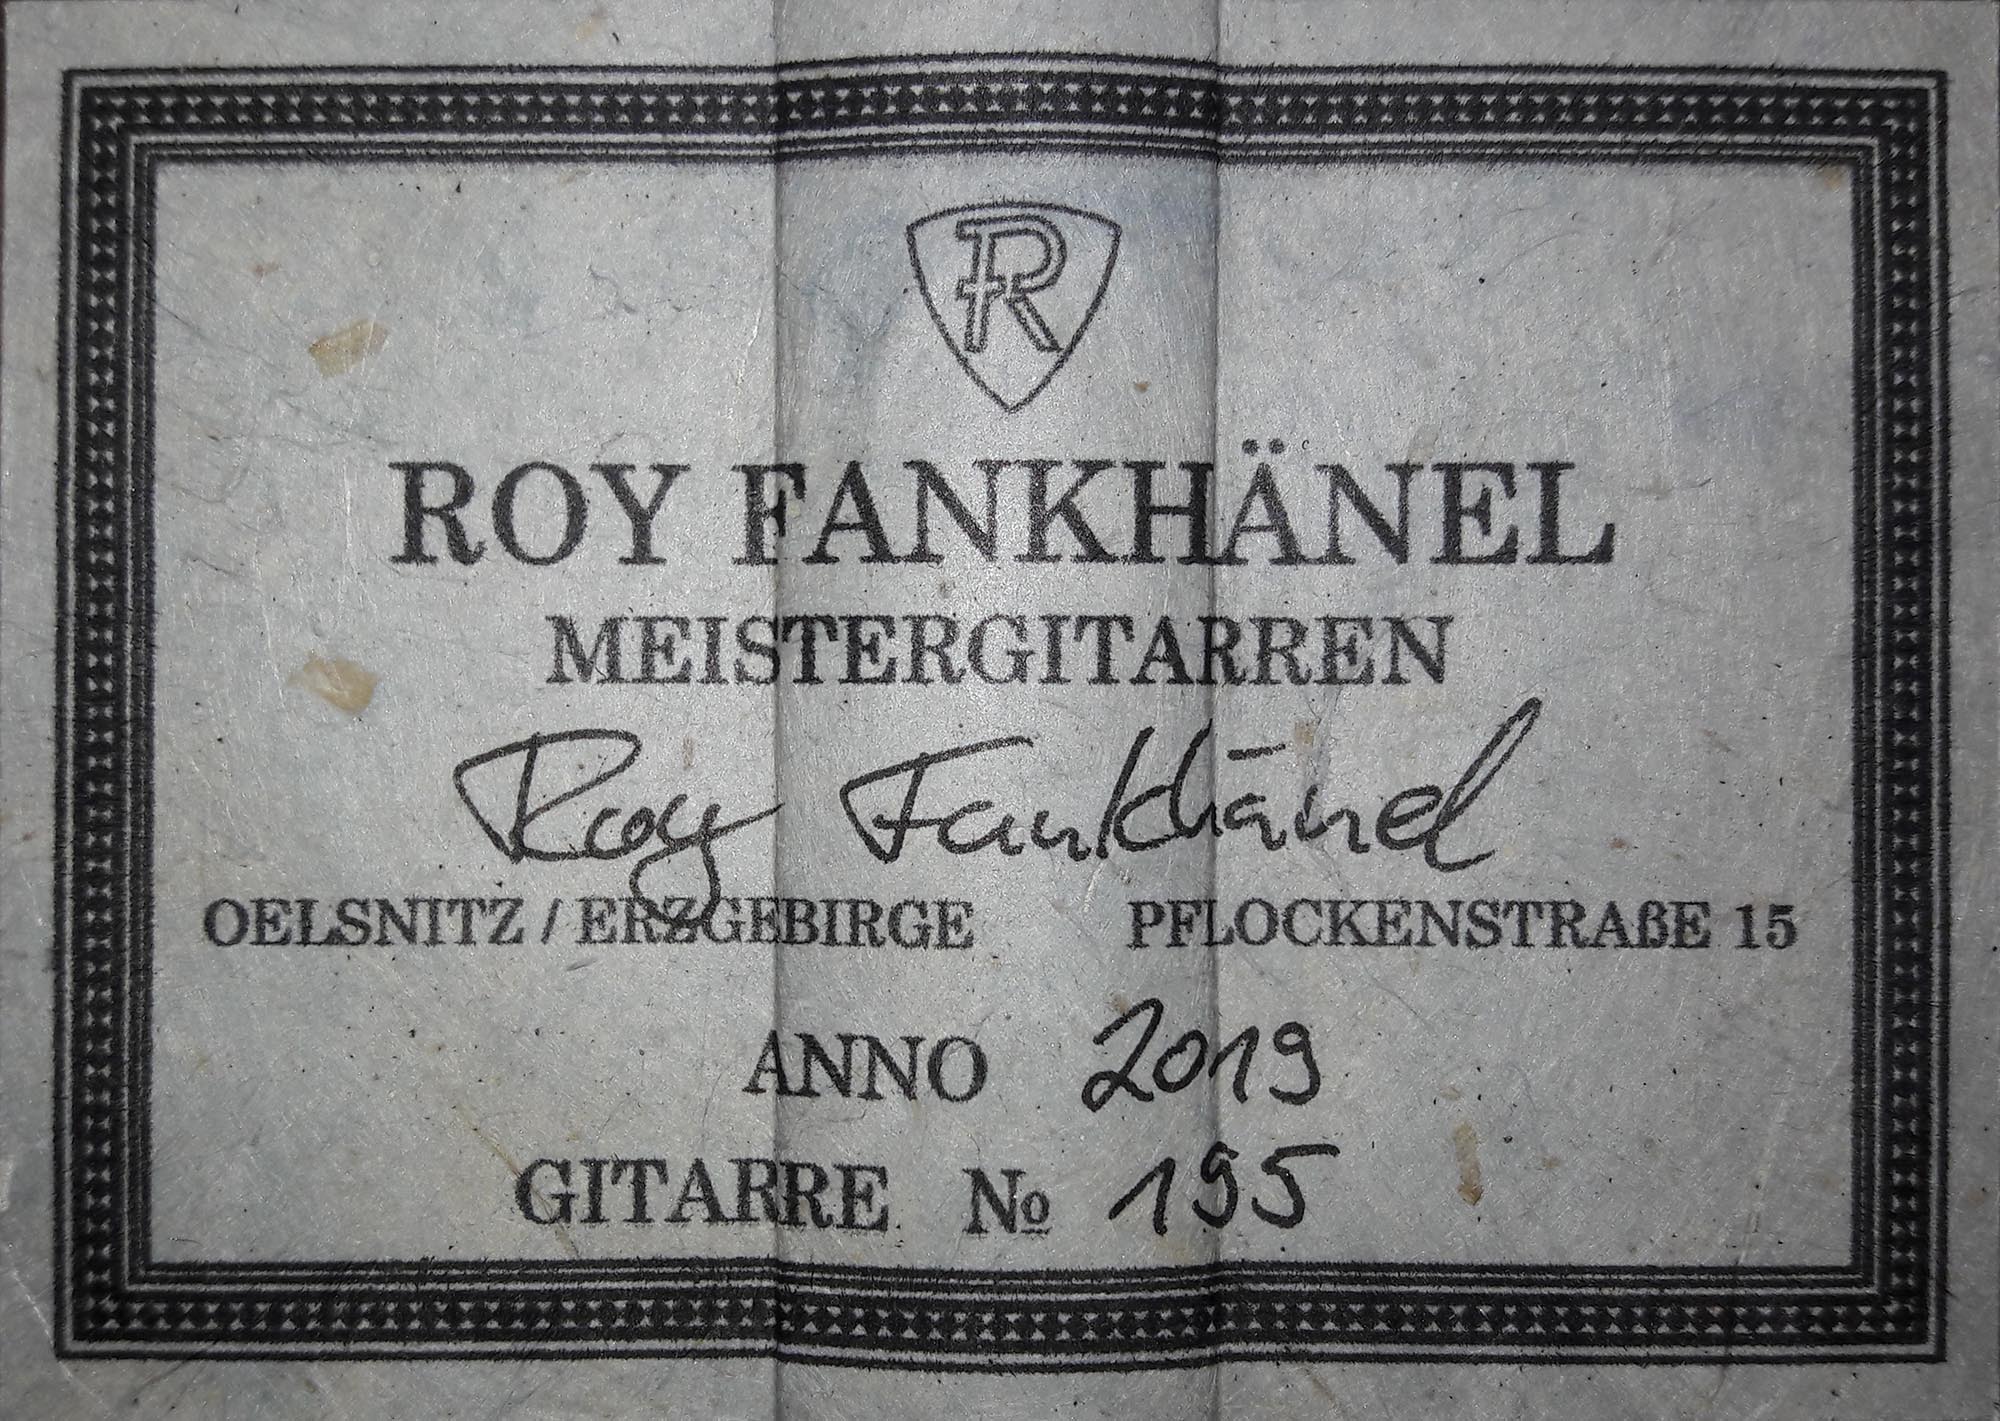 a royfankhänel RF195 18012019 label